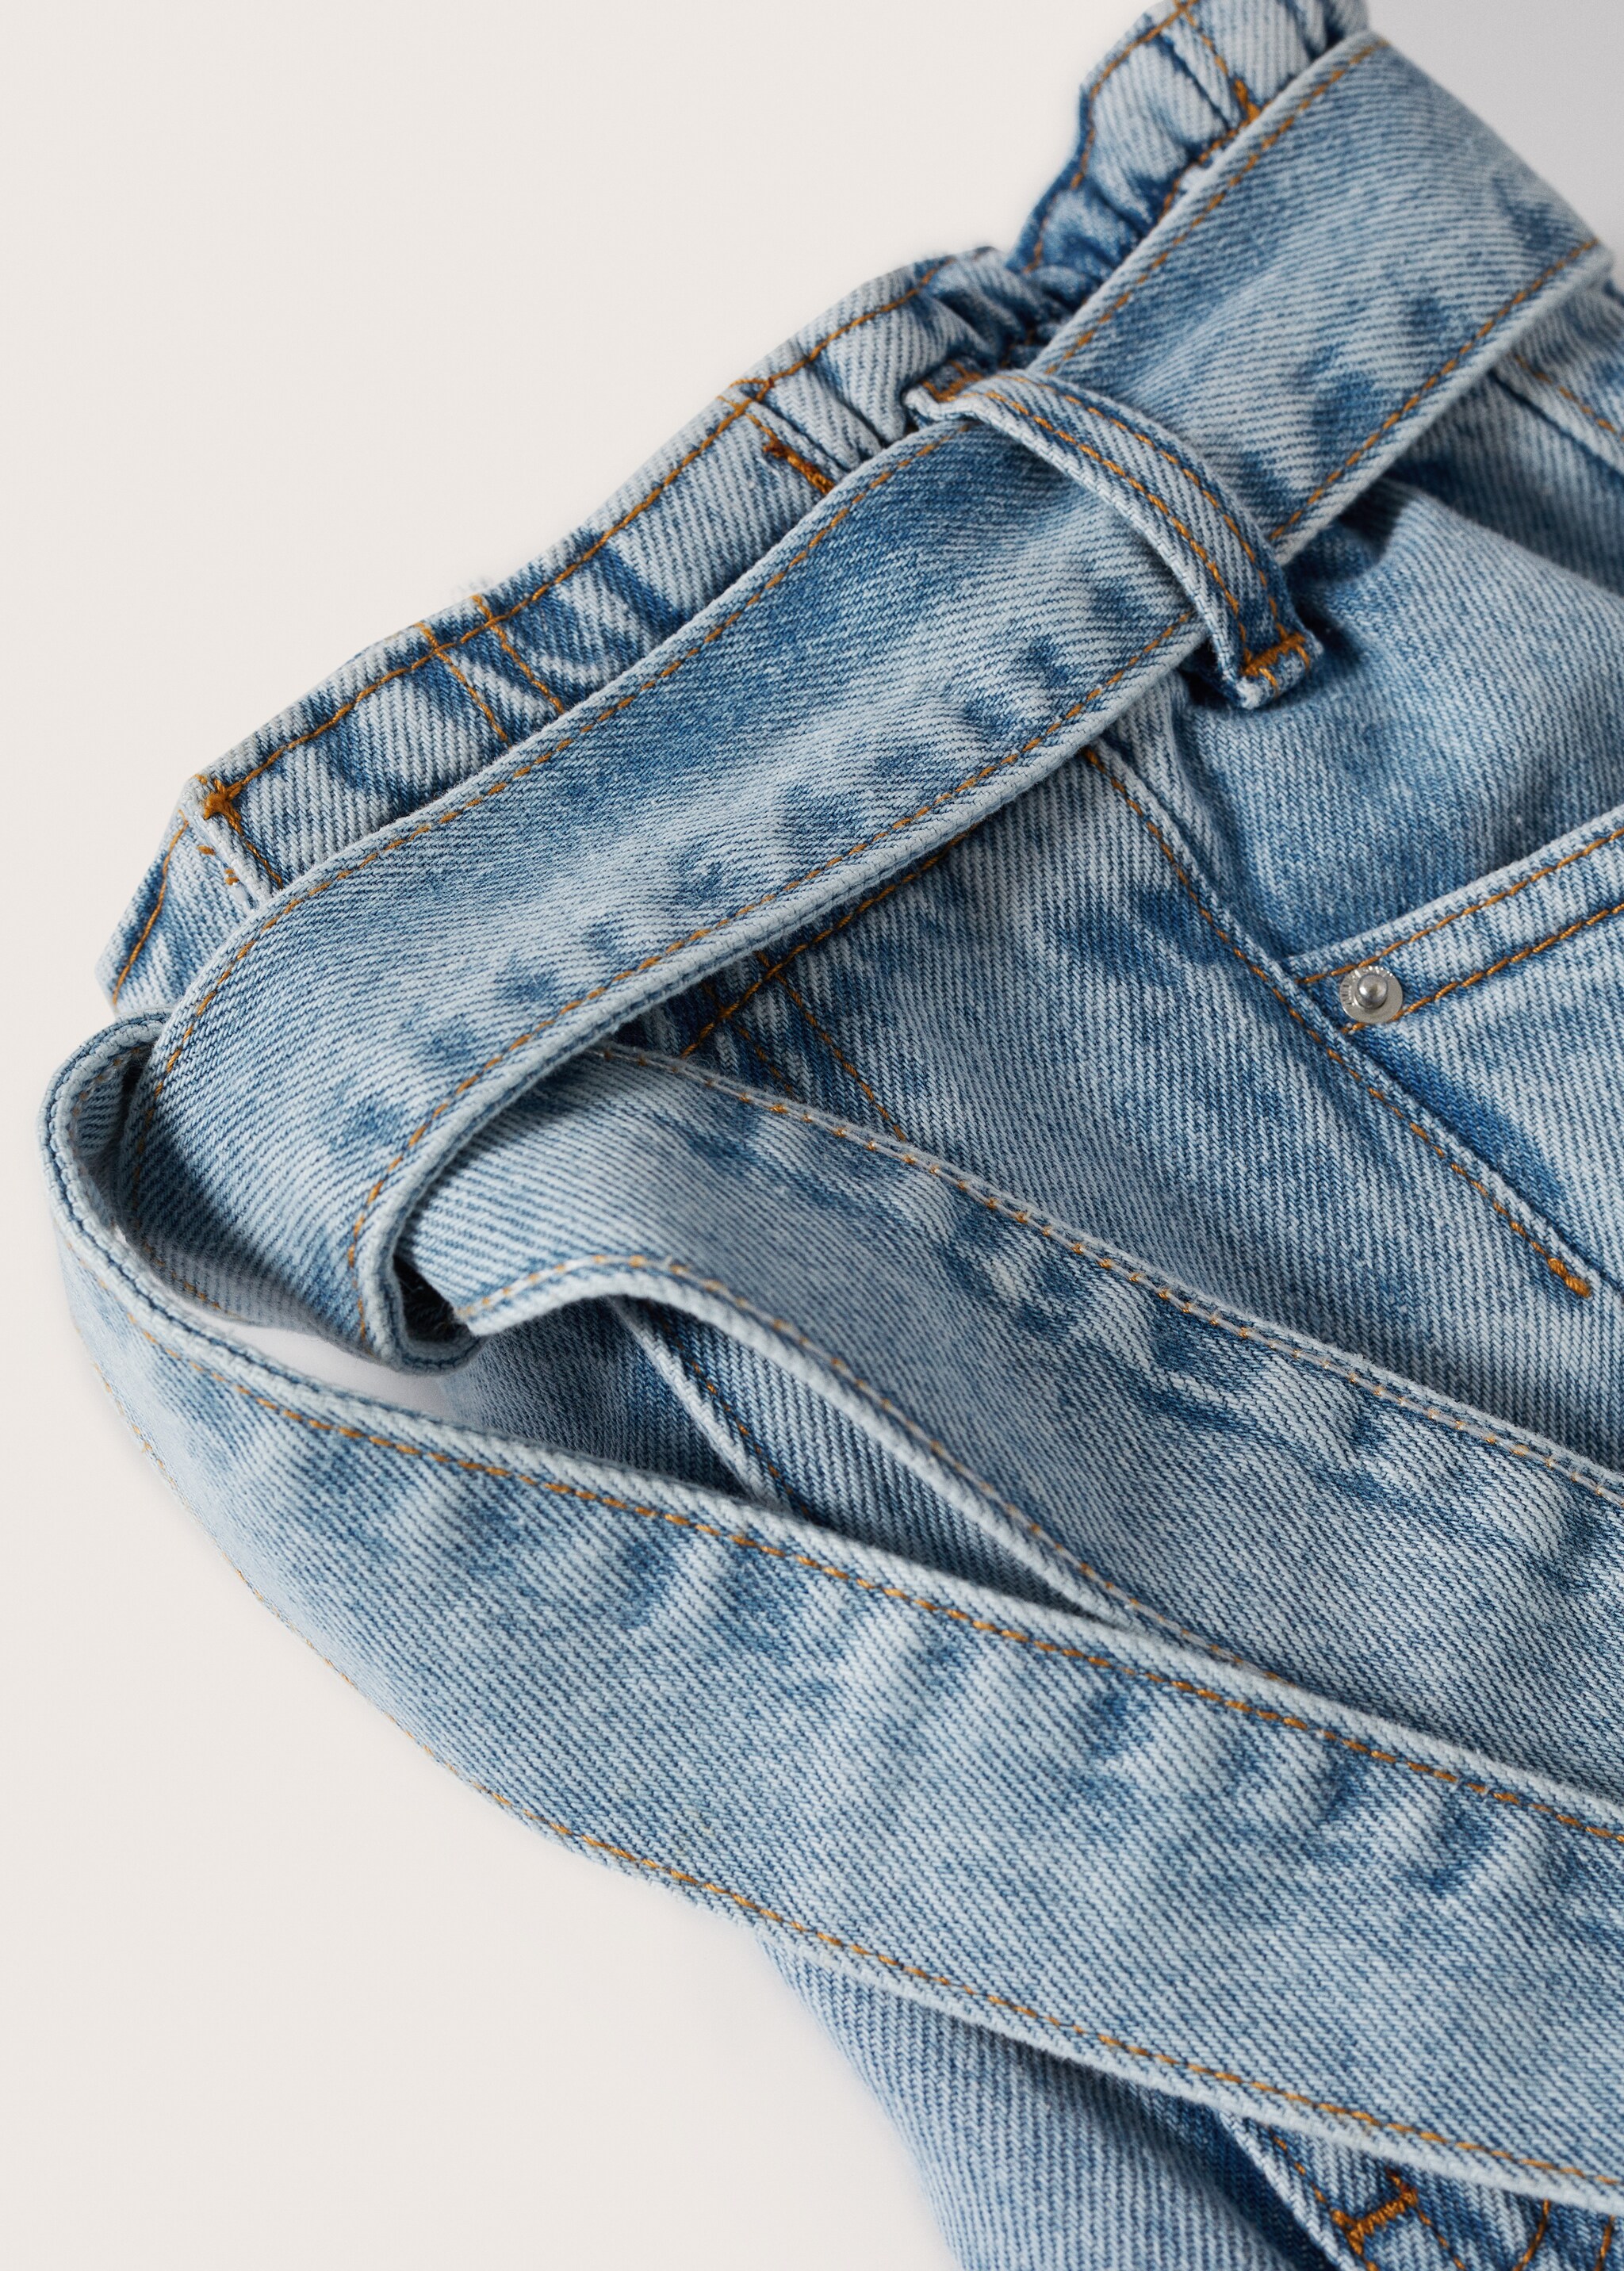 Paperbag denim shorts - Details of the article 8